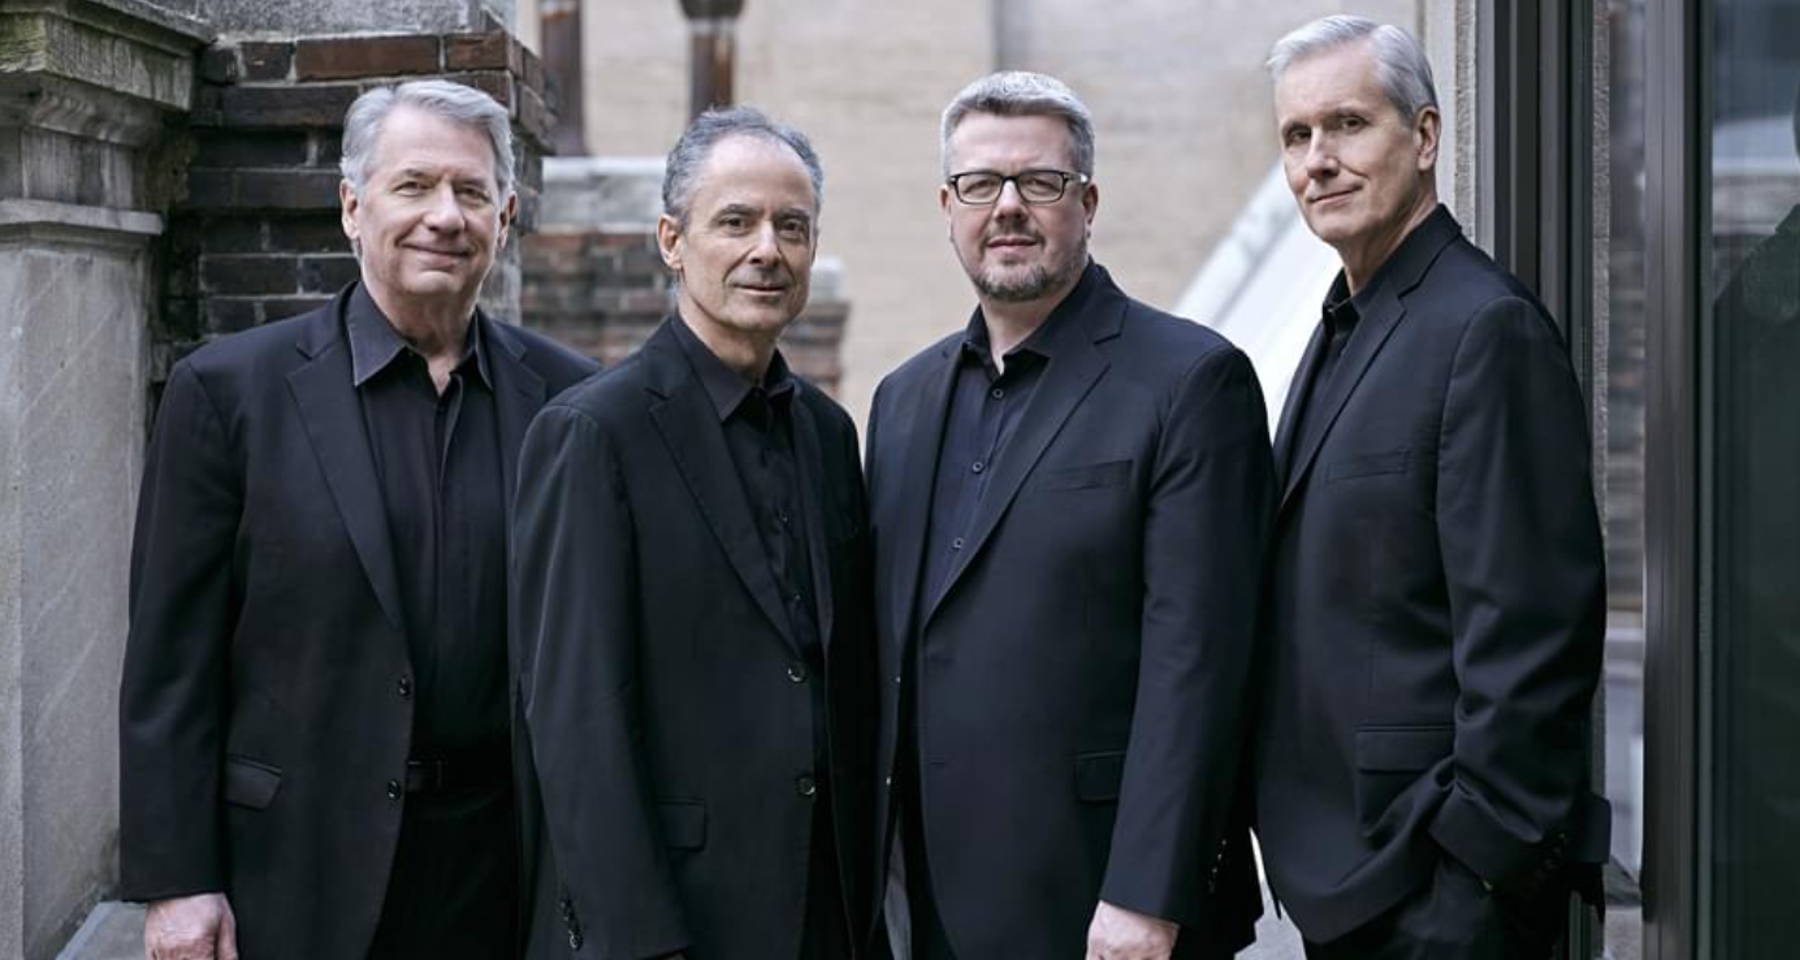 San Francisco Performances Welcomes The Emerson String Quartet!